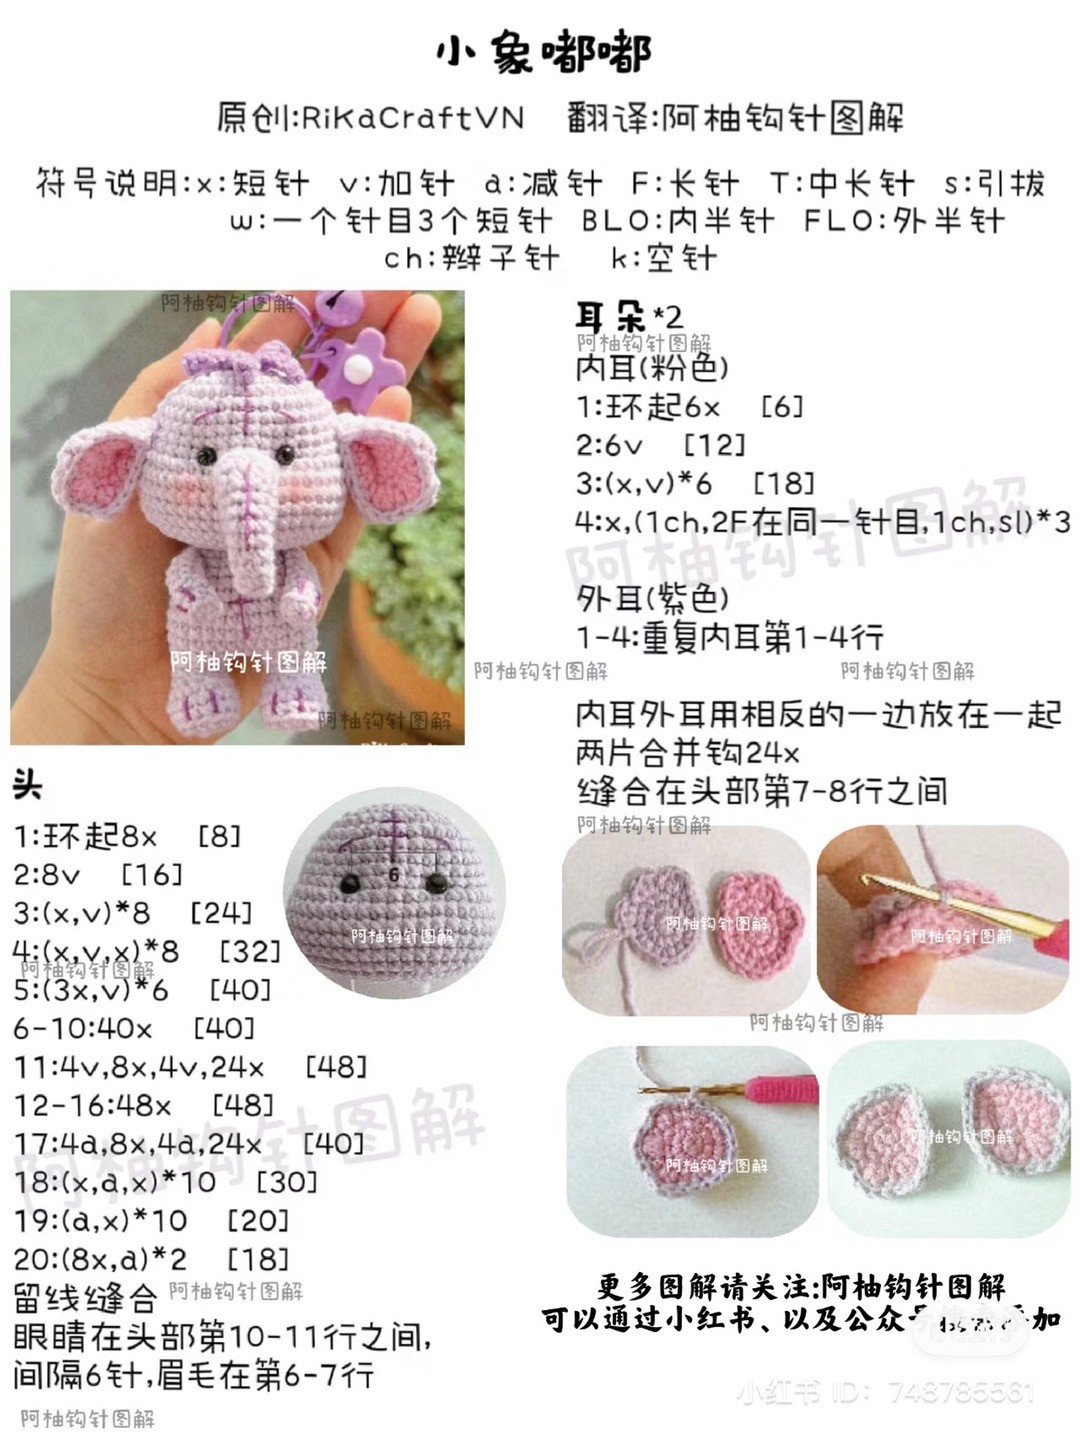 Small elephant keychain crochet pattern